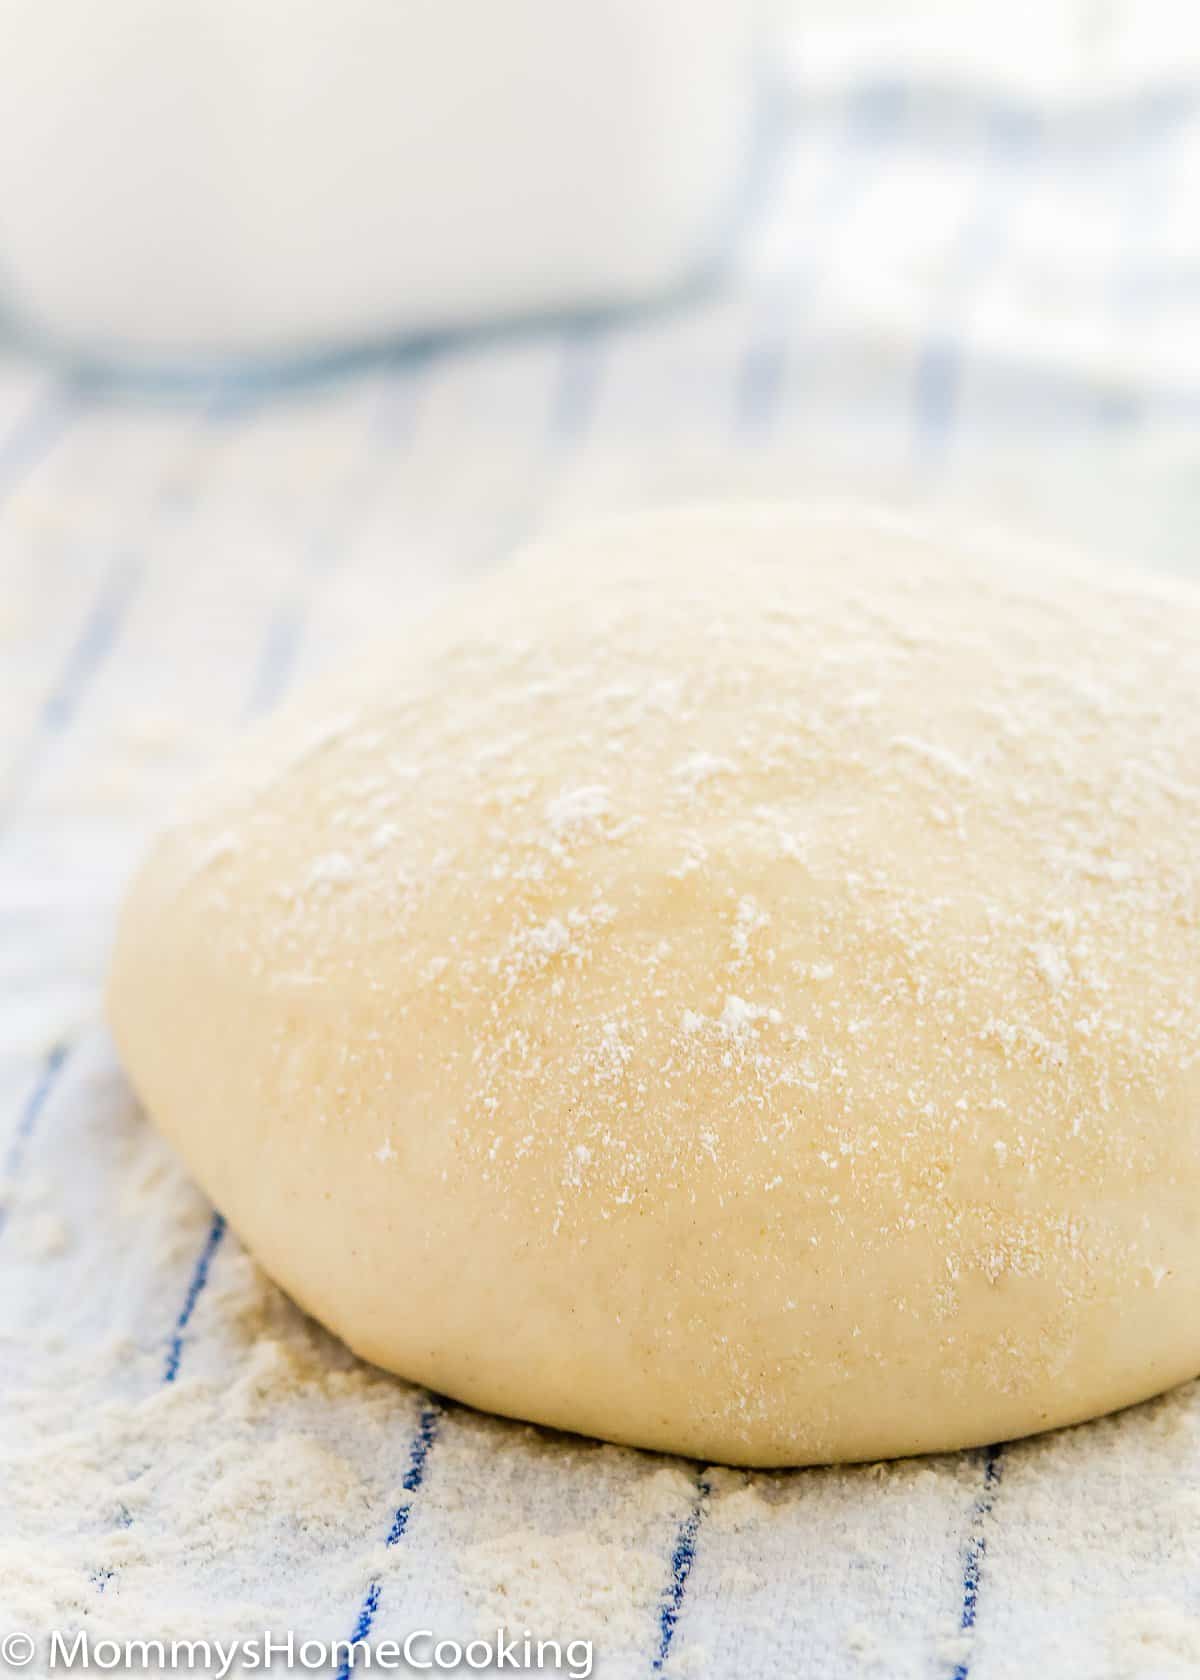 homemade pizza dough ball